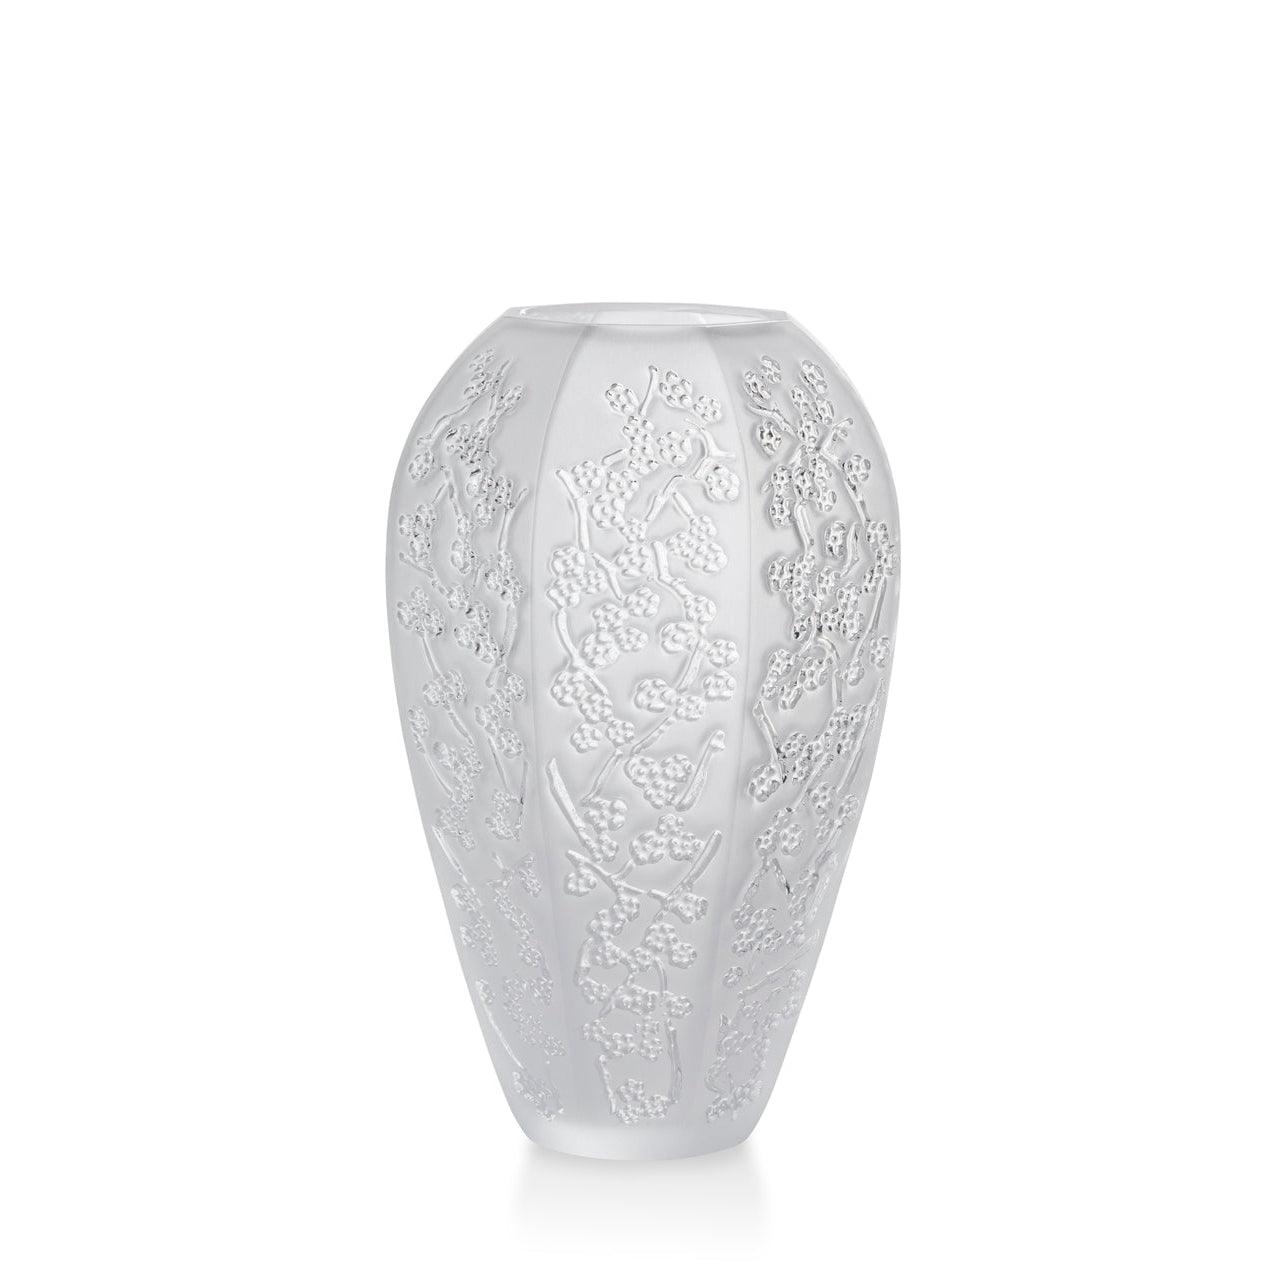 Sakura Vase Large Size (Lalique) - Gallery Gifts Online 